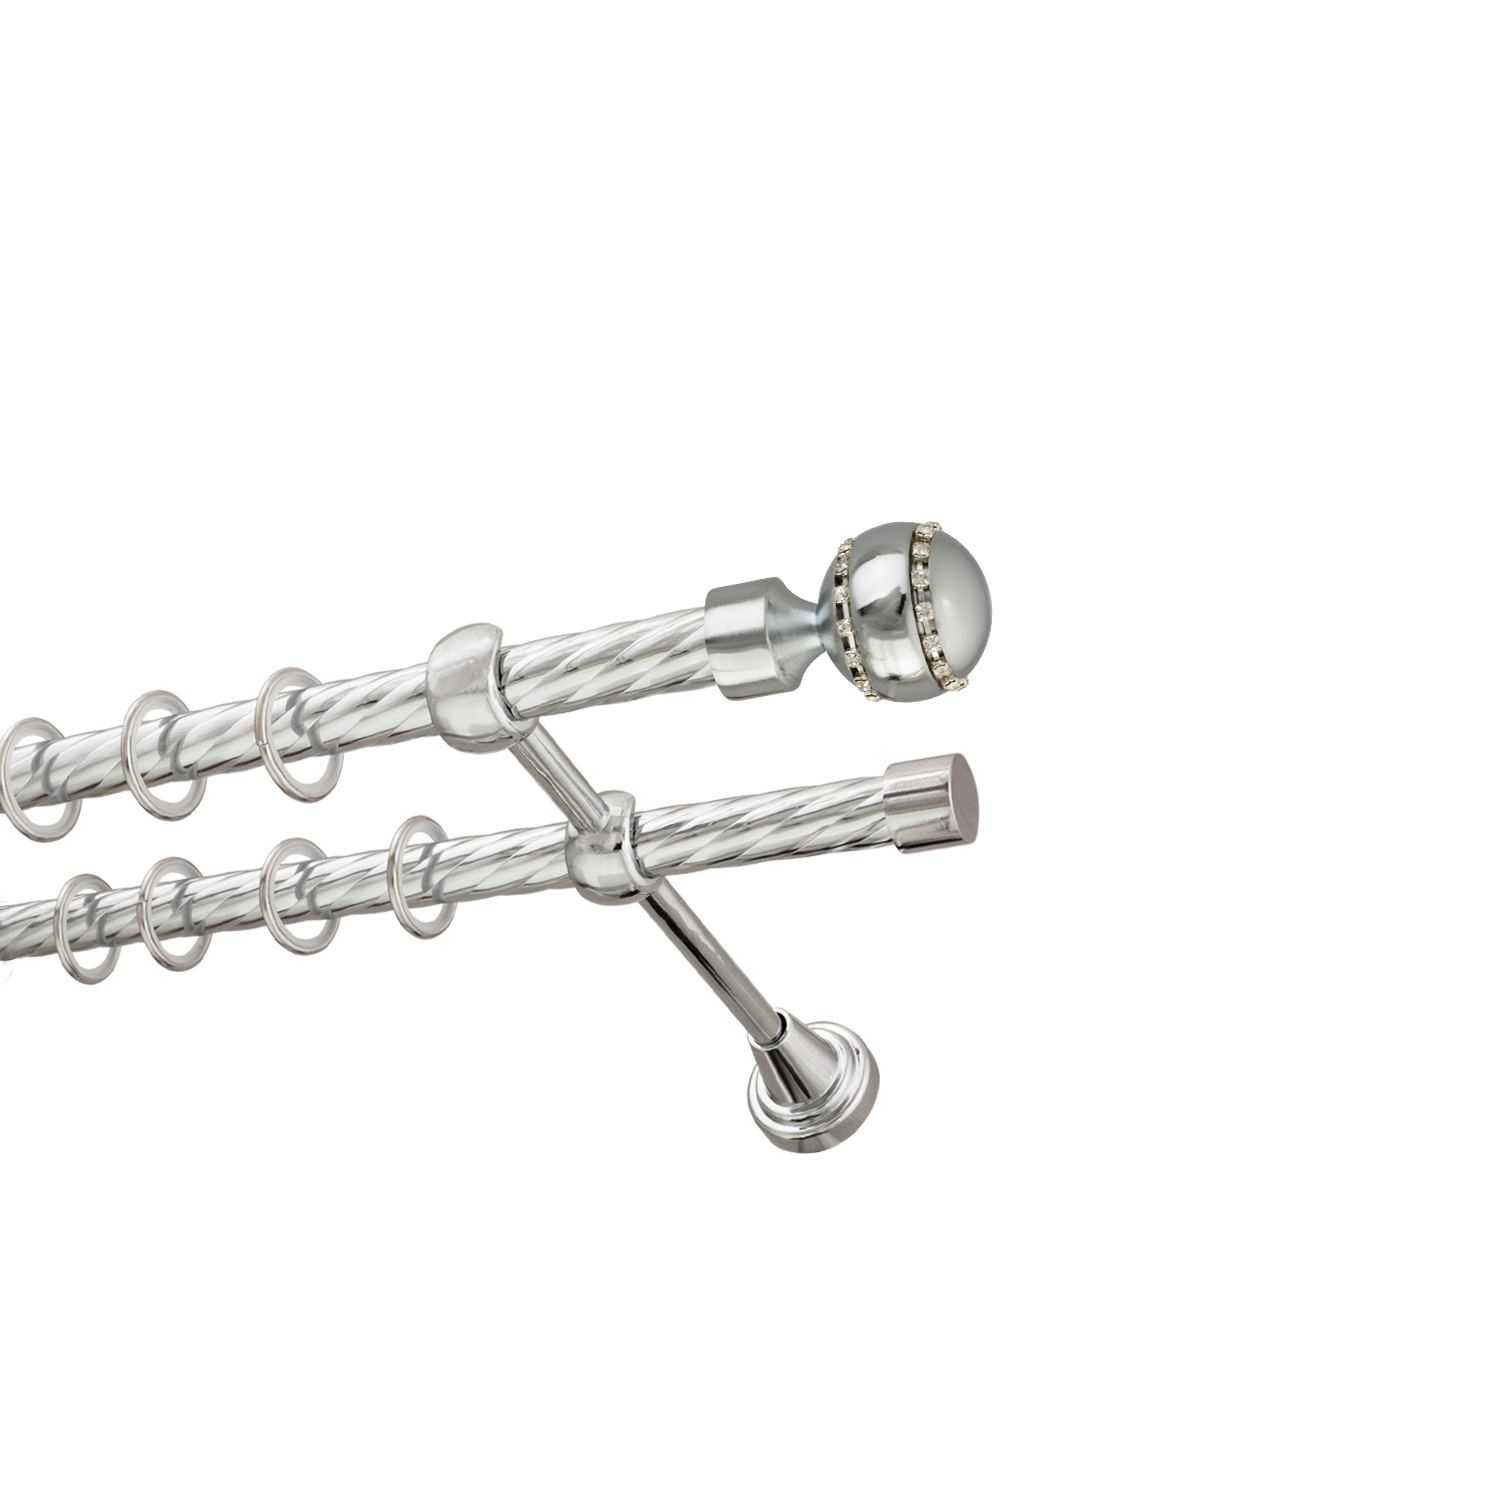 Металлический карниз для штор Модерн, двухрядный 16/16 мм, серебро, витая штанга, длина 240 см - фото Wikidecor.ru